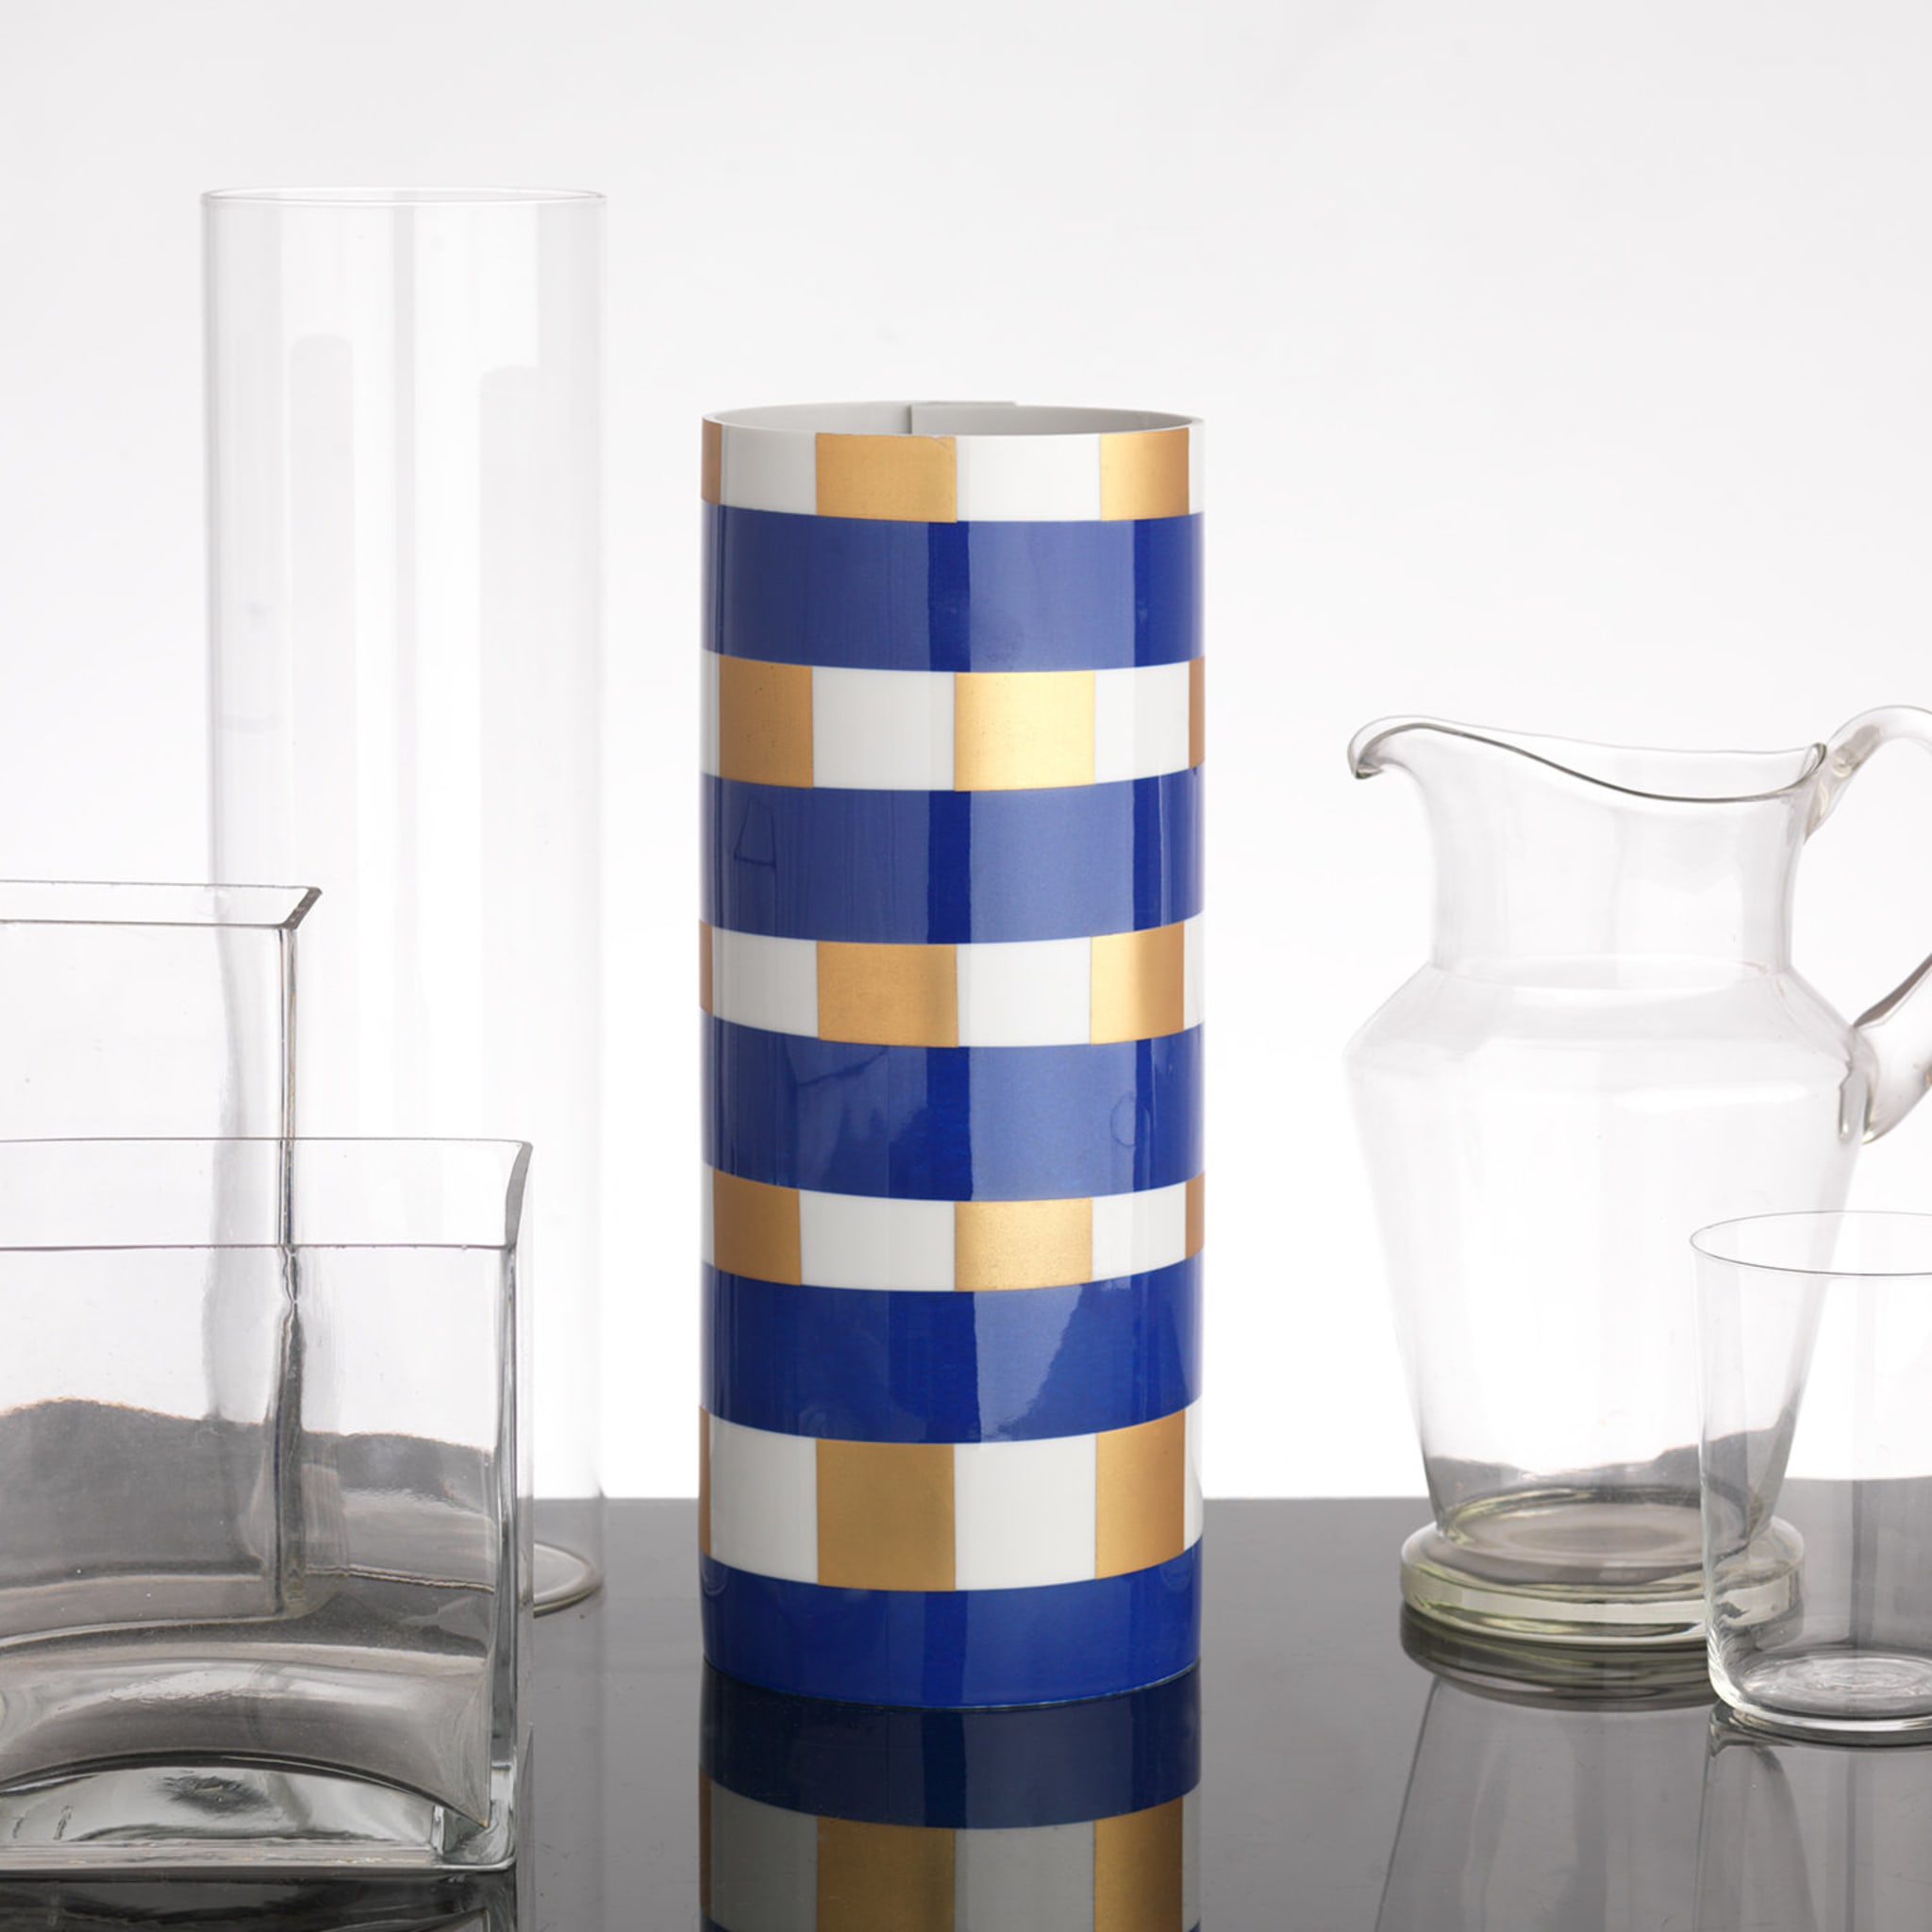 Cobalt Blue Vase #1 - Alternative view 1